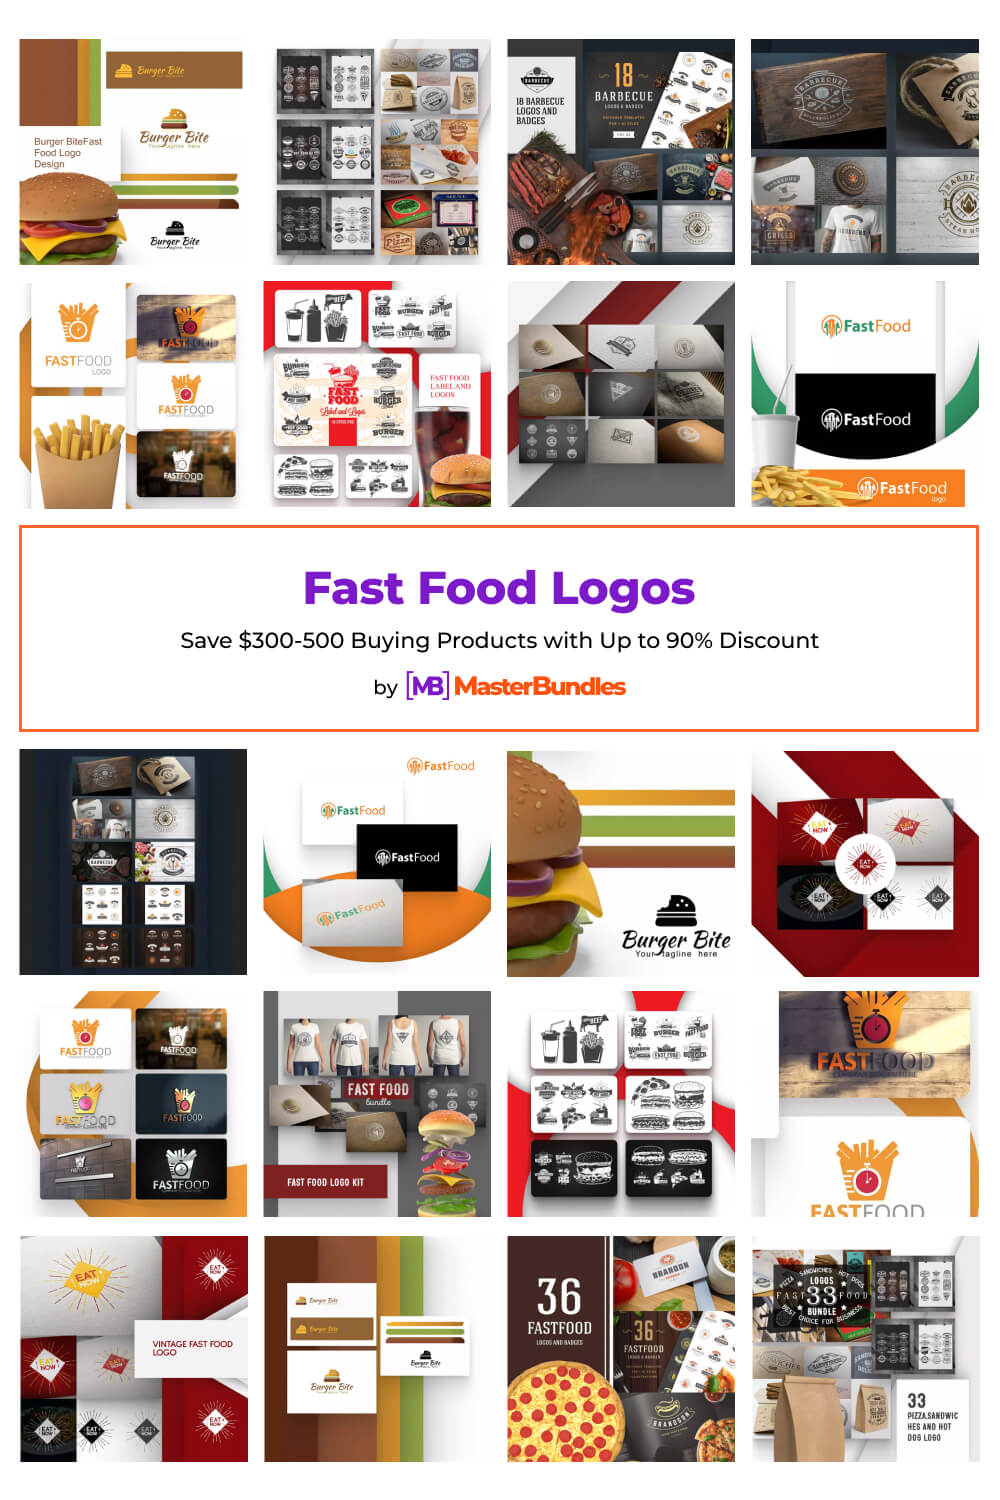 fast food logos pinterest image.